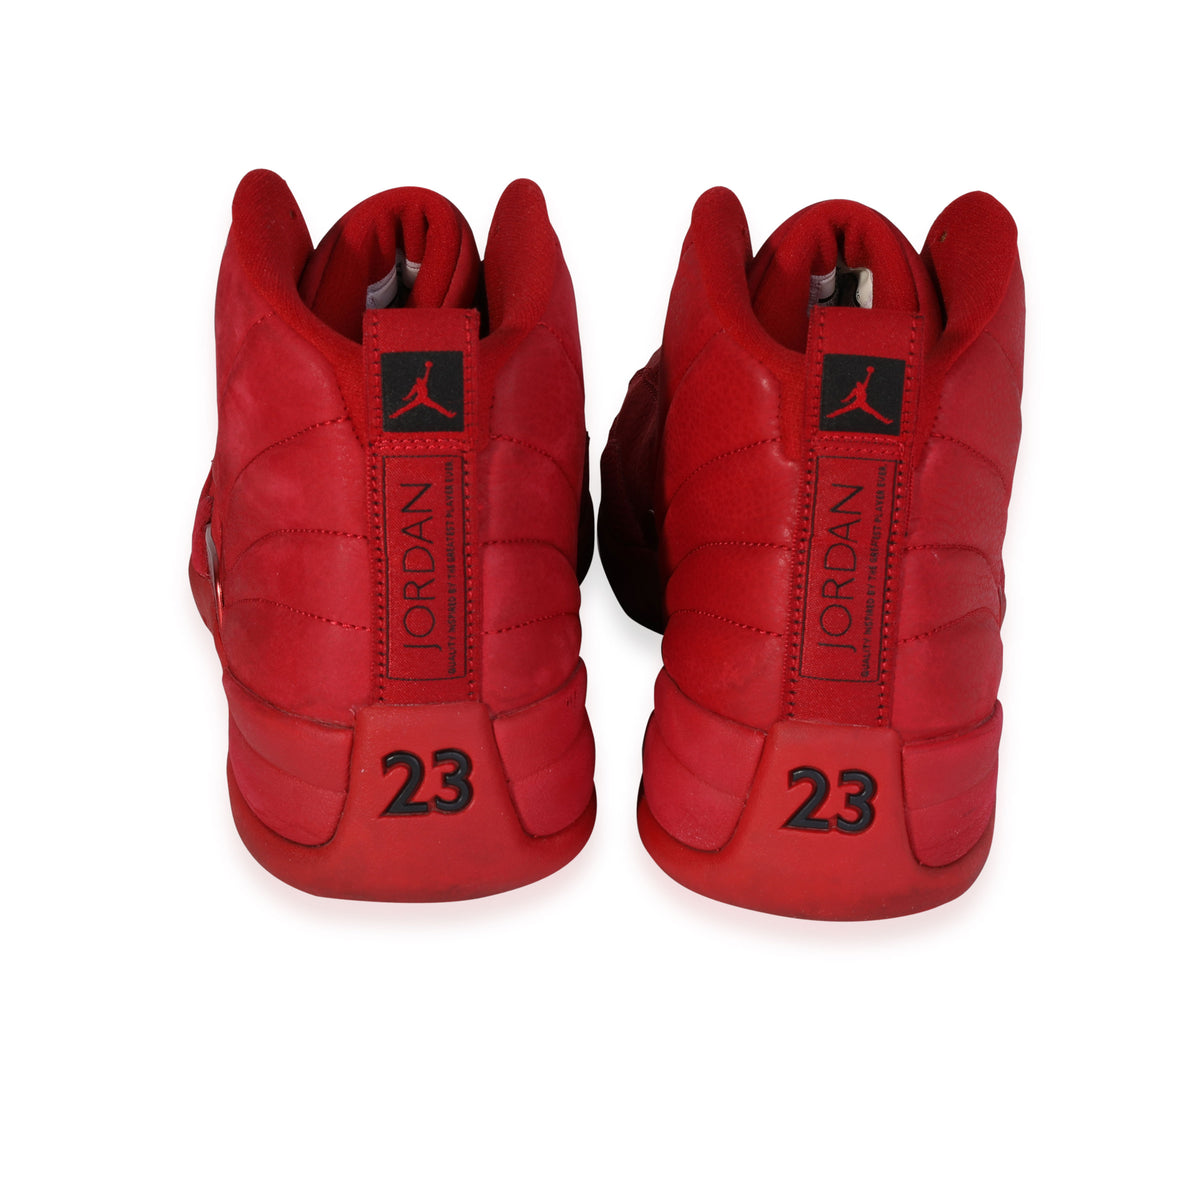 Air Jordan 12 Retro 'Gym Red' (10.5 US)